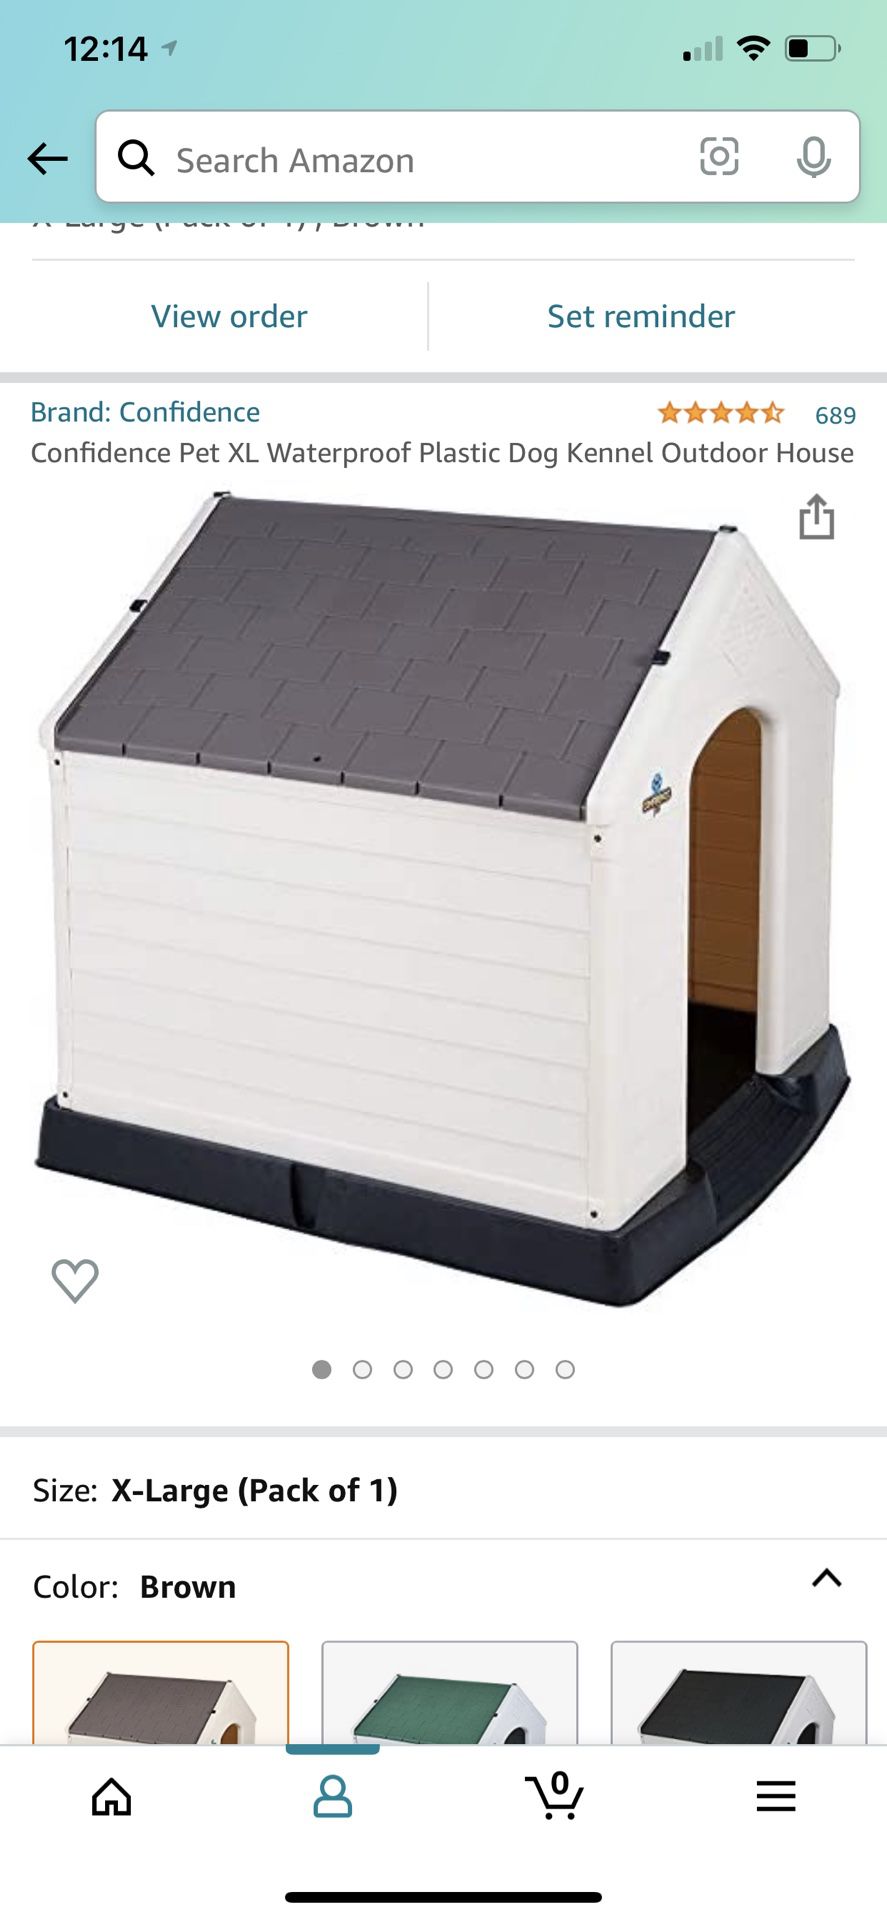 Confidence Pet XL Waterproof Dog House